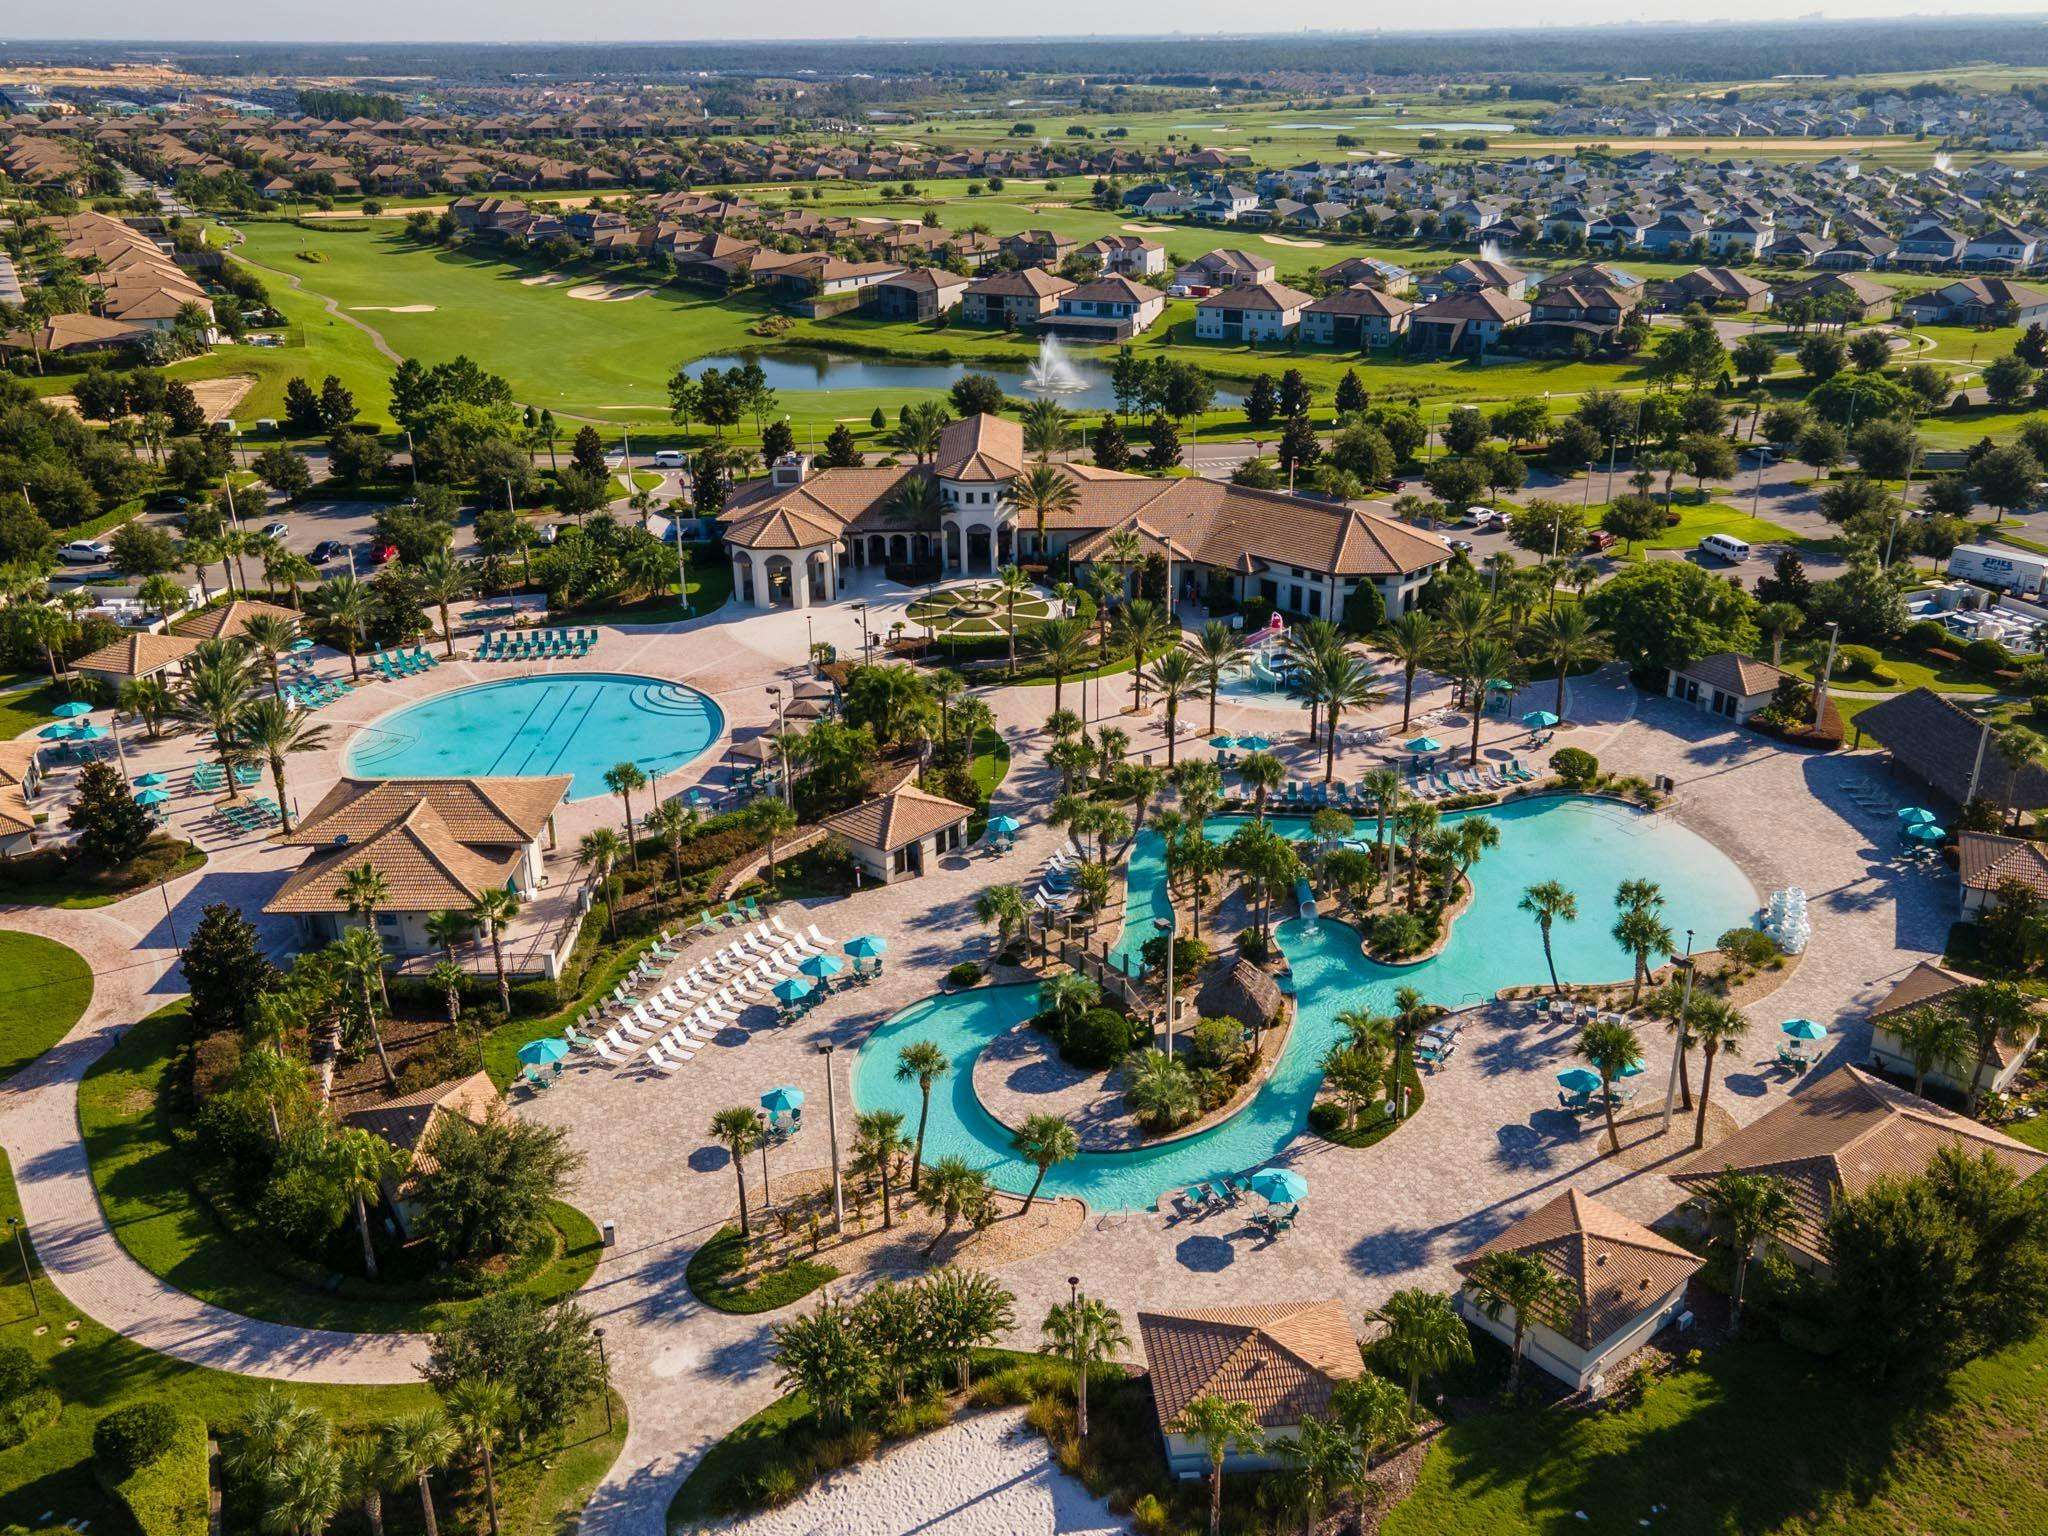 Orlando Resorts aerial view of Championsgate